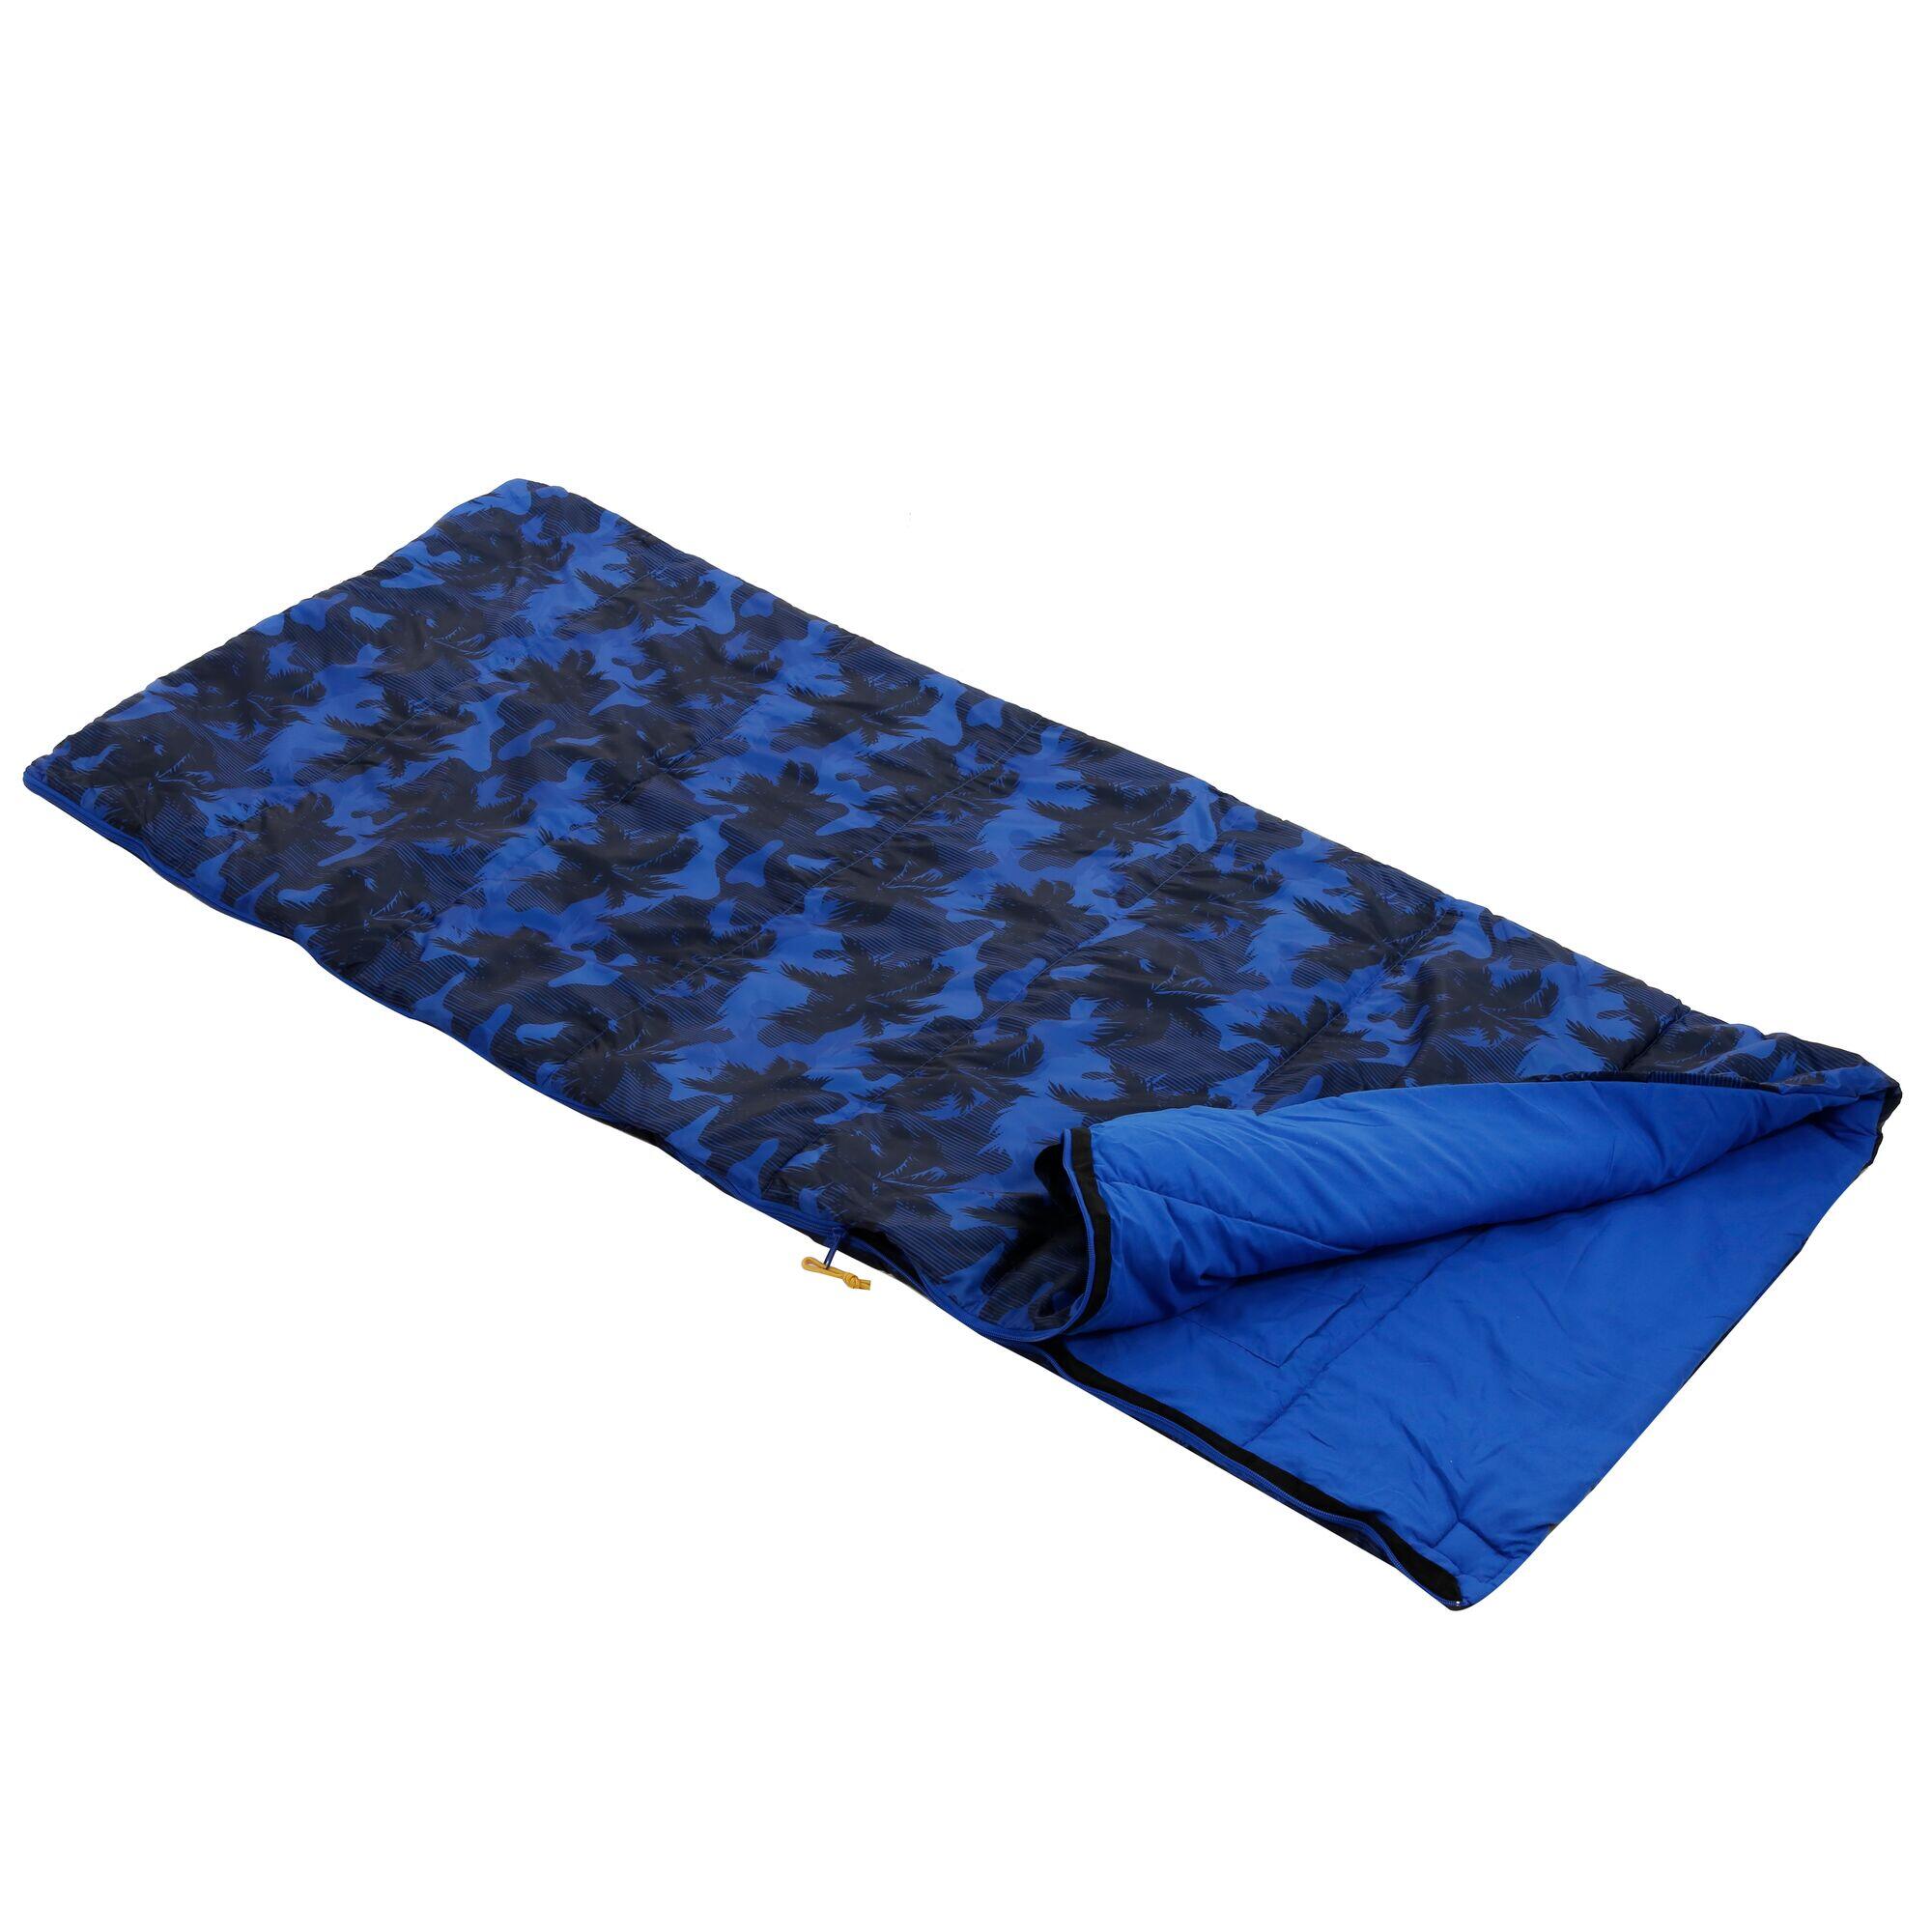 Maui Kids Kids' Camping Sleeping Bag - Oxford Blue Palm Tree Print 1/4